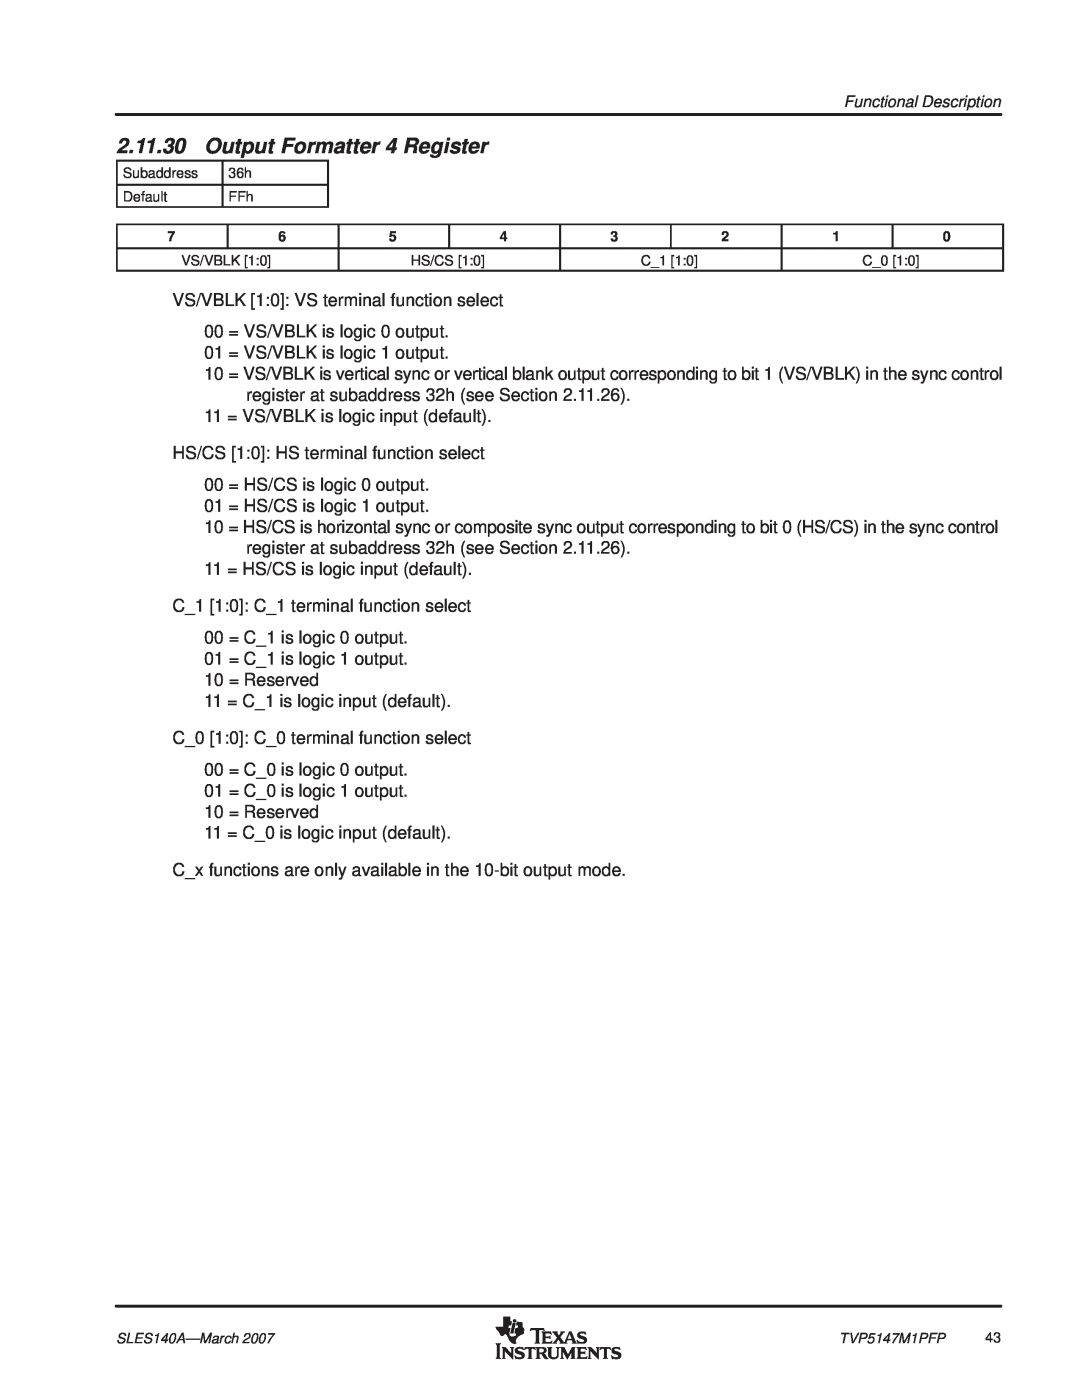 Texas Instruments TVP5147M1PFP manual Output Formatter 4 Register 